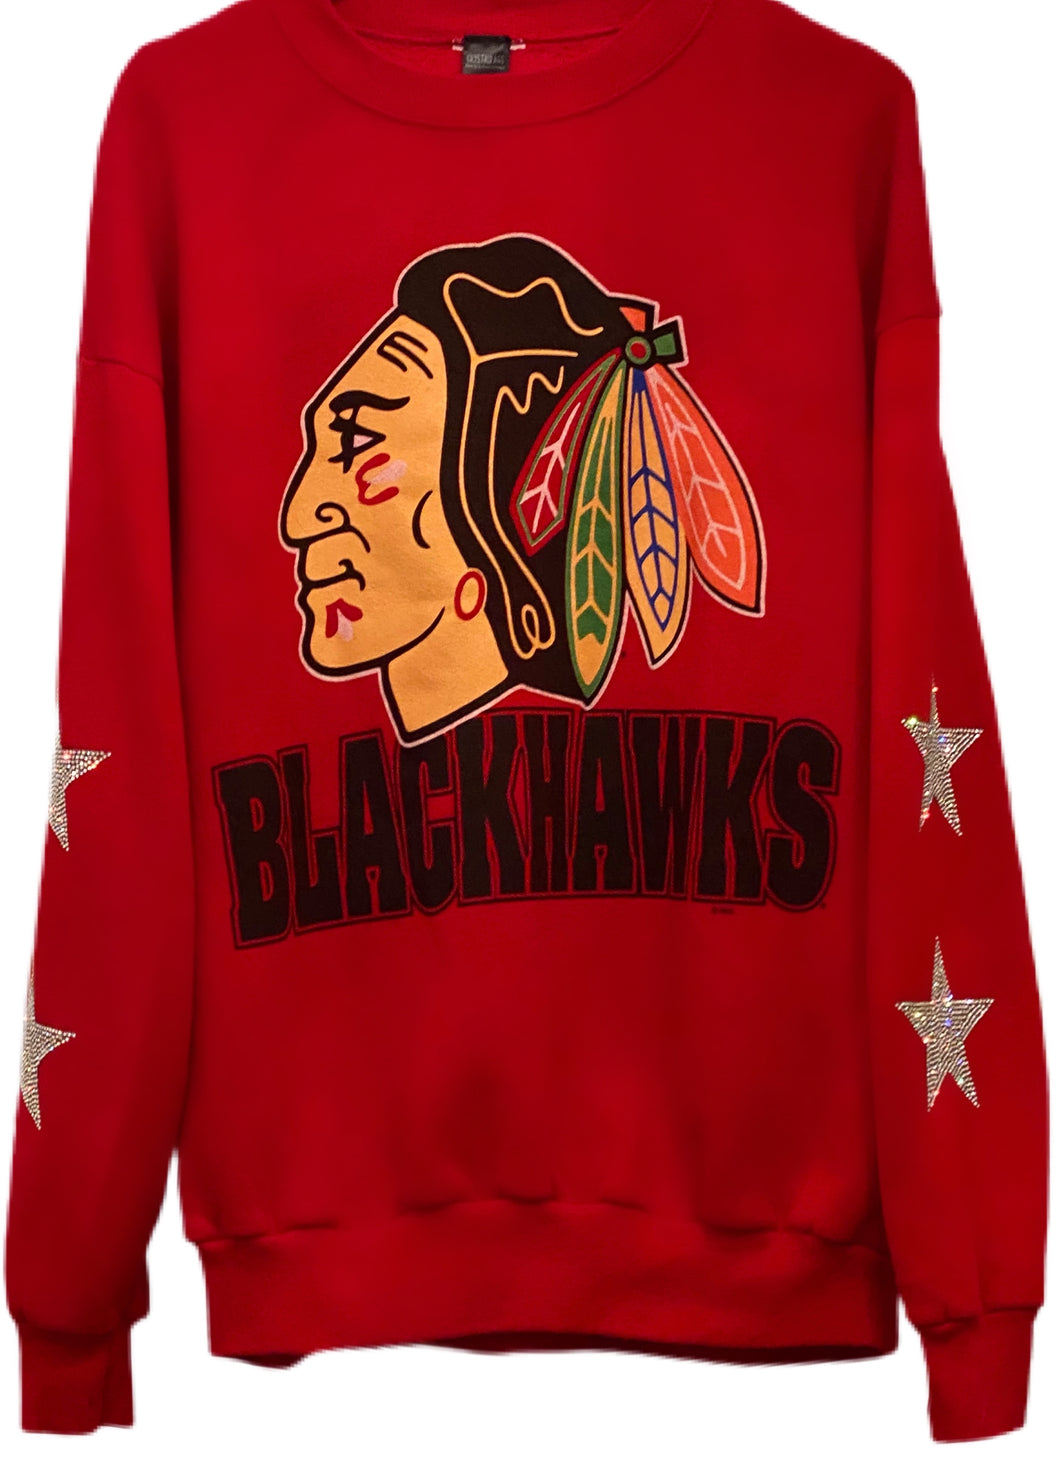 Chicago Blackhawks, NHL One of a KIND Vintage Sweatshirt with Crystal Star Design